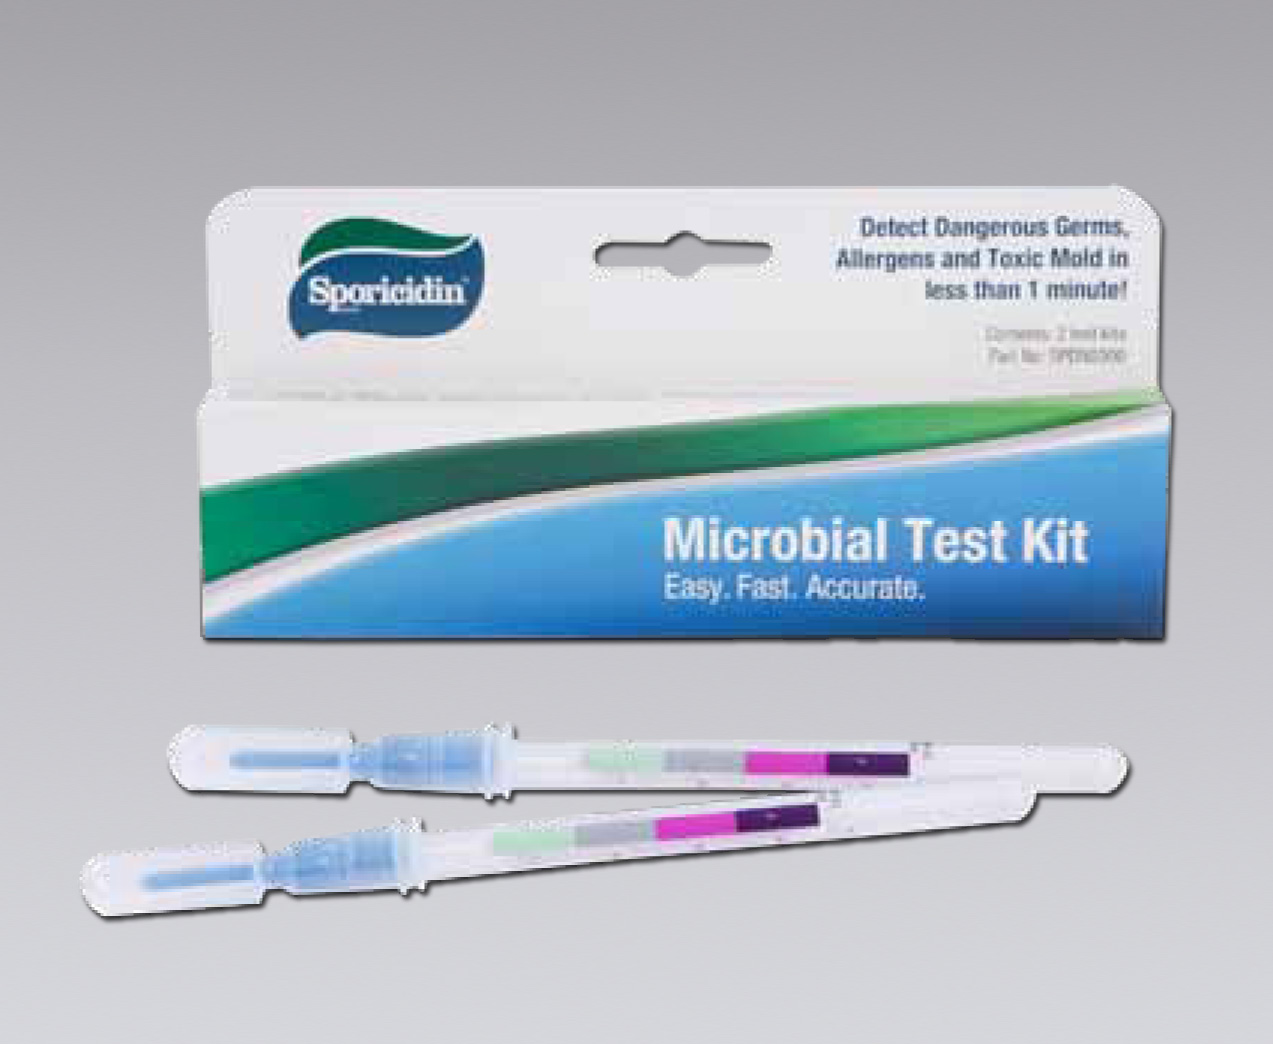 862123 - Sporicidin Microbial Test Kit 2/pk - NIKRO Industries, Inc.